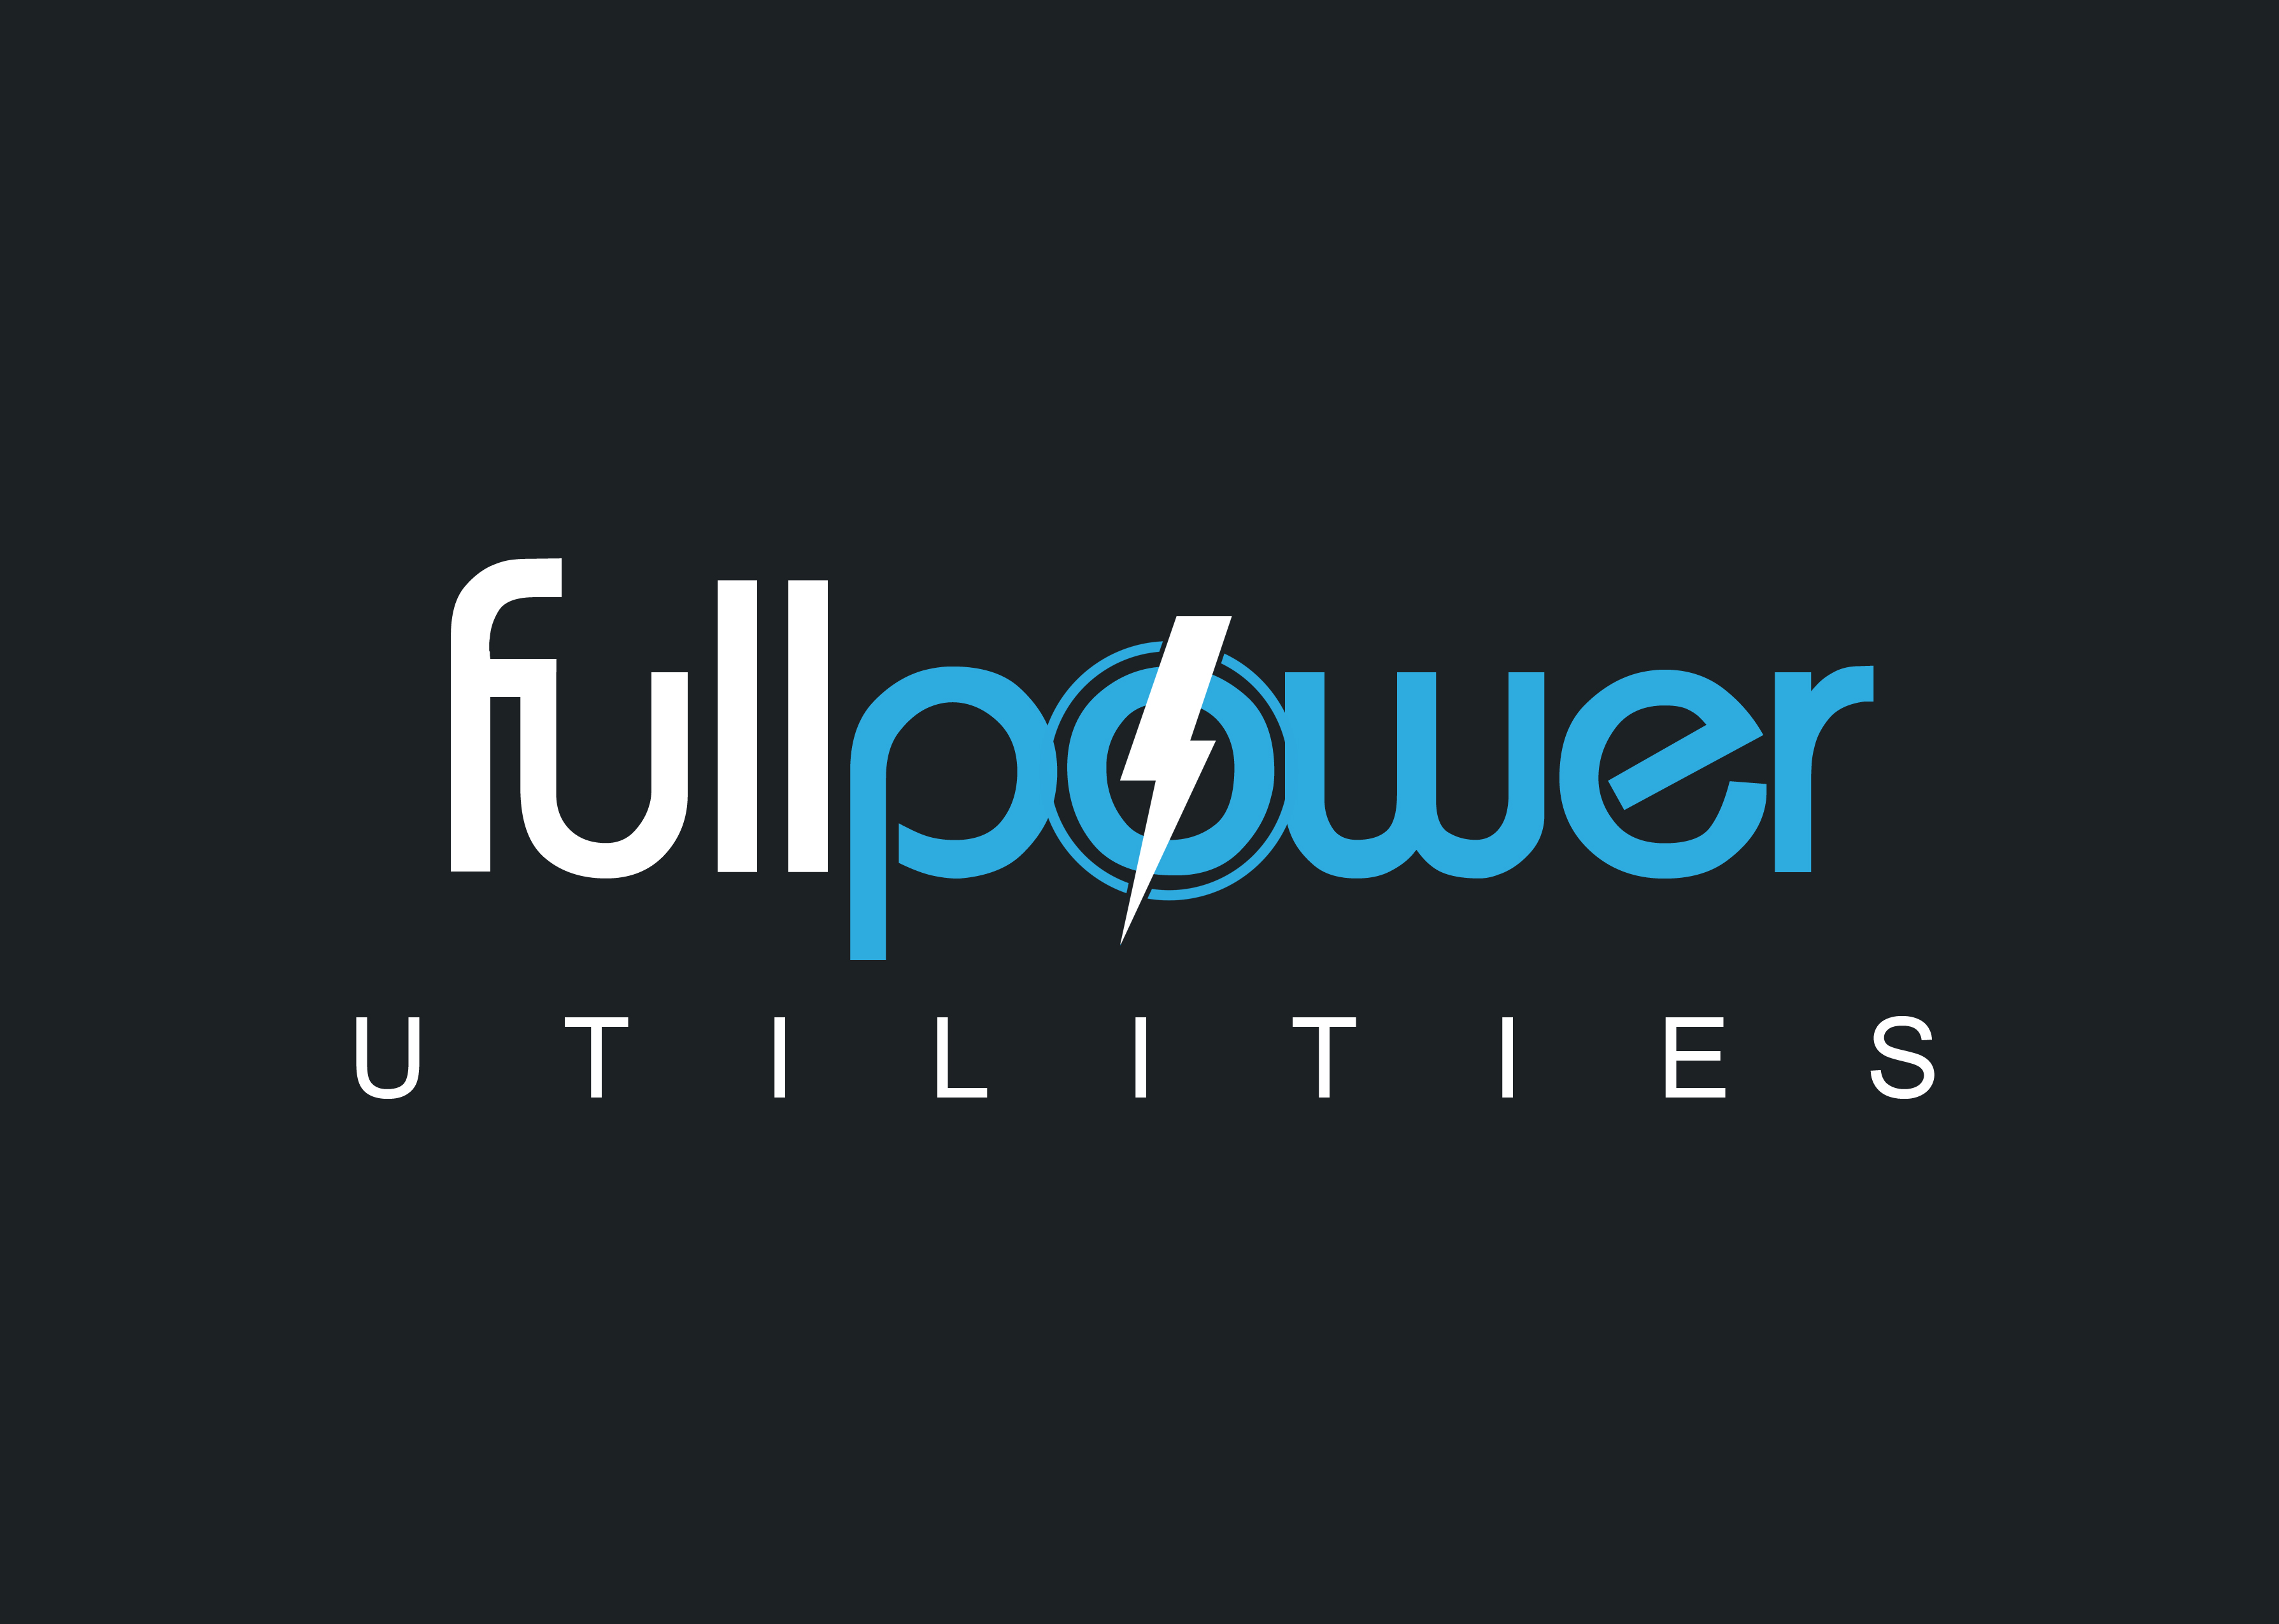 Full Power Utilities